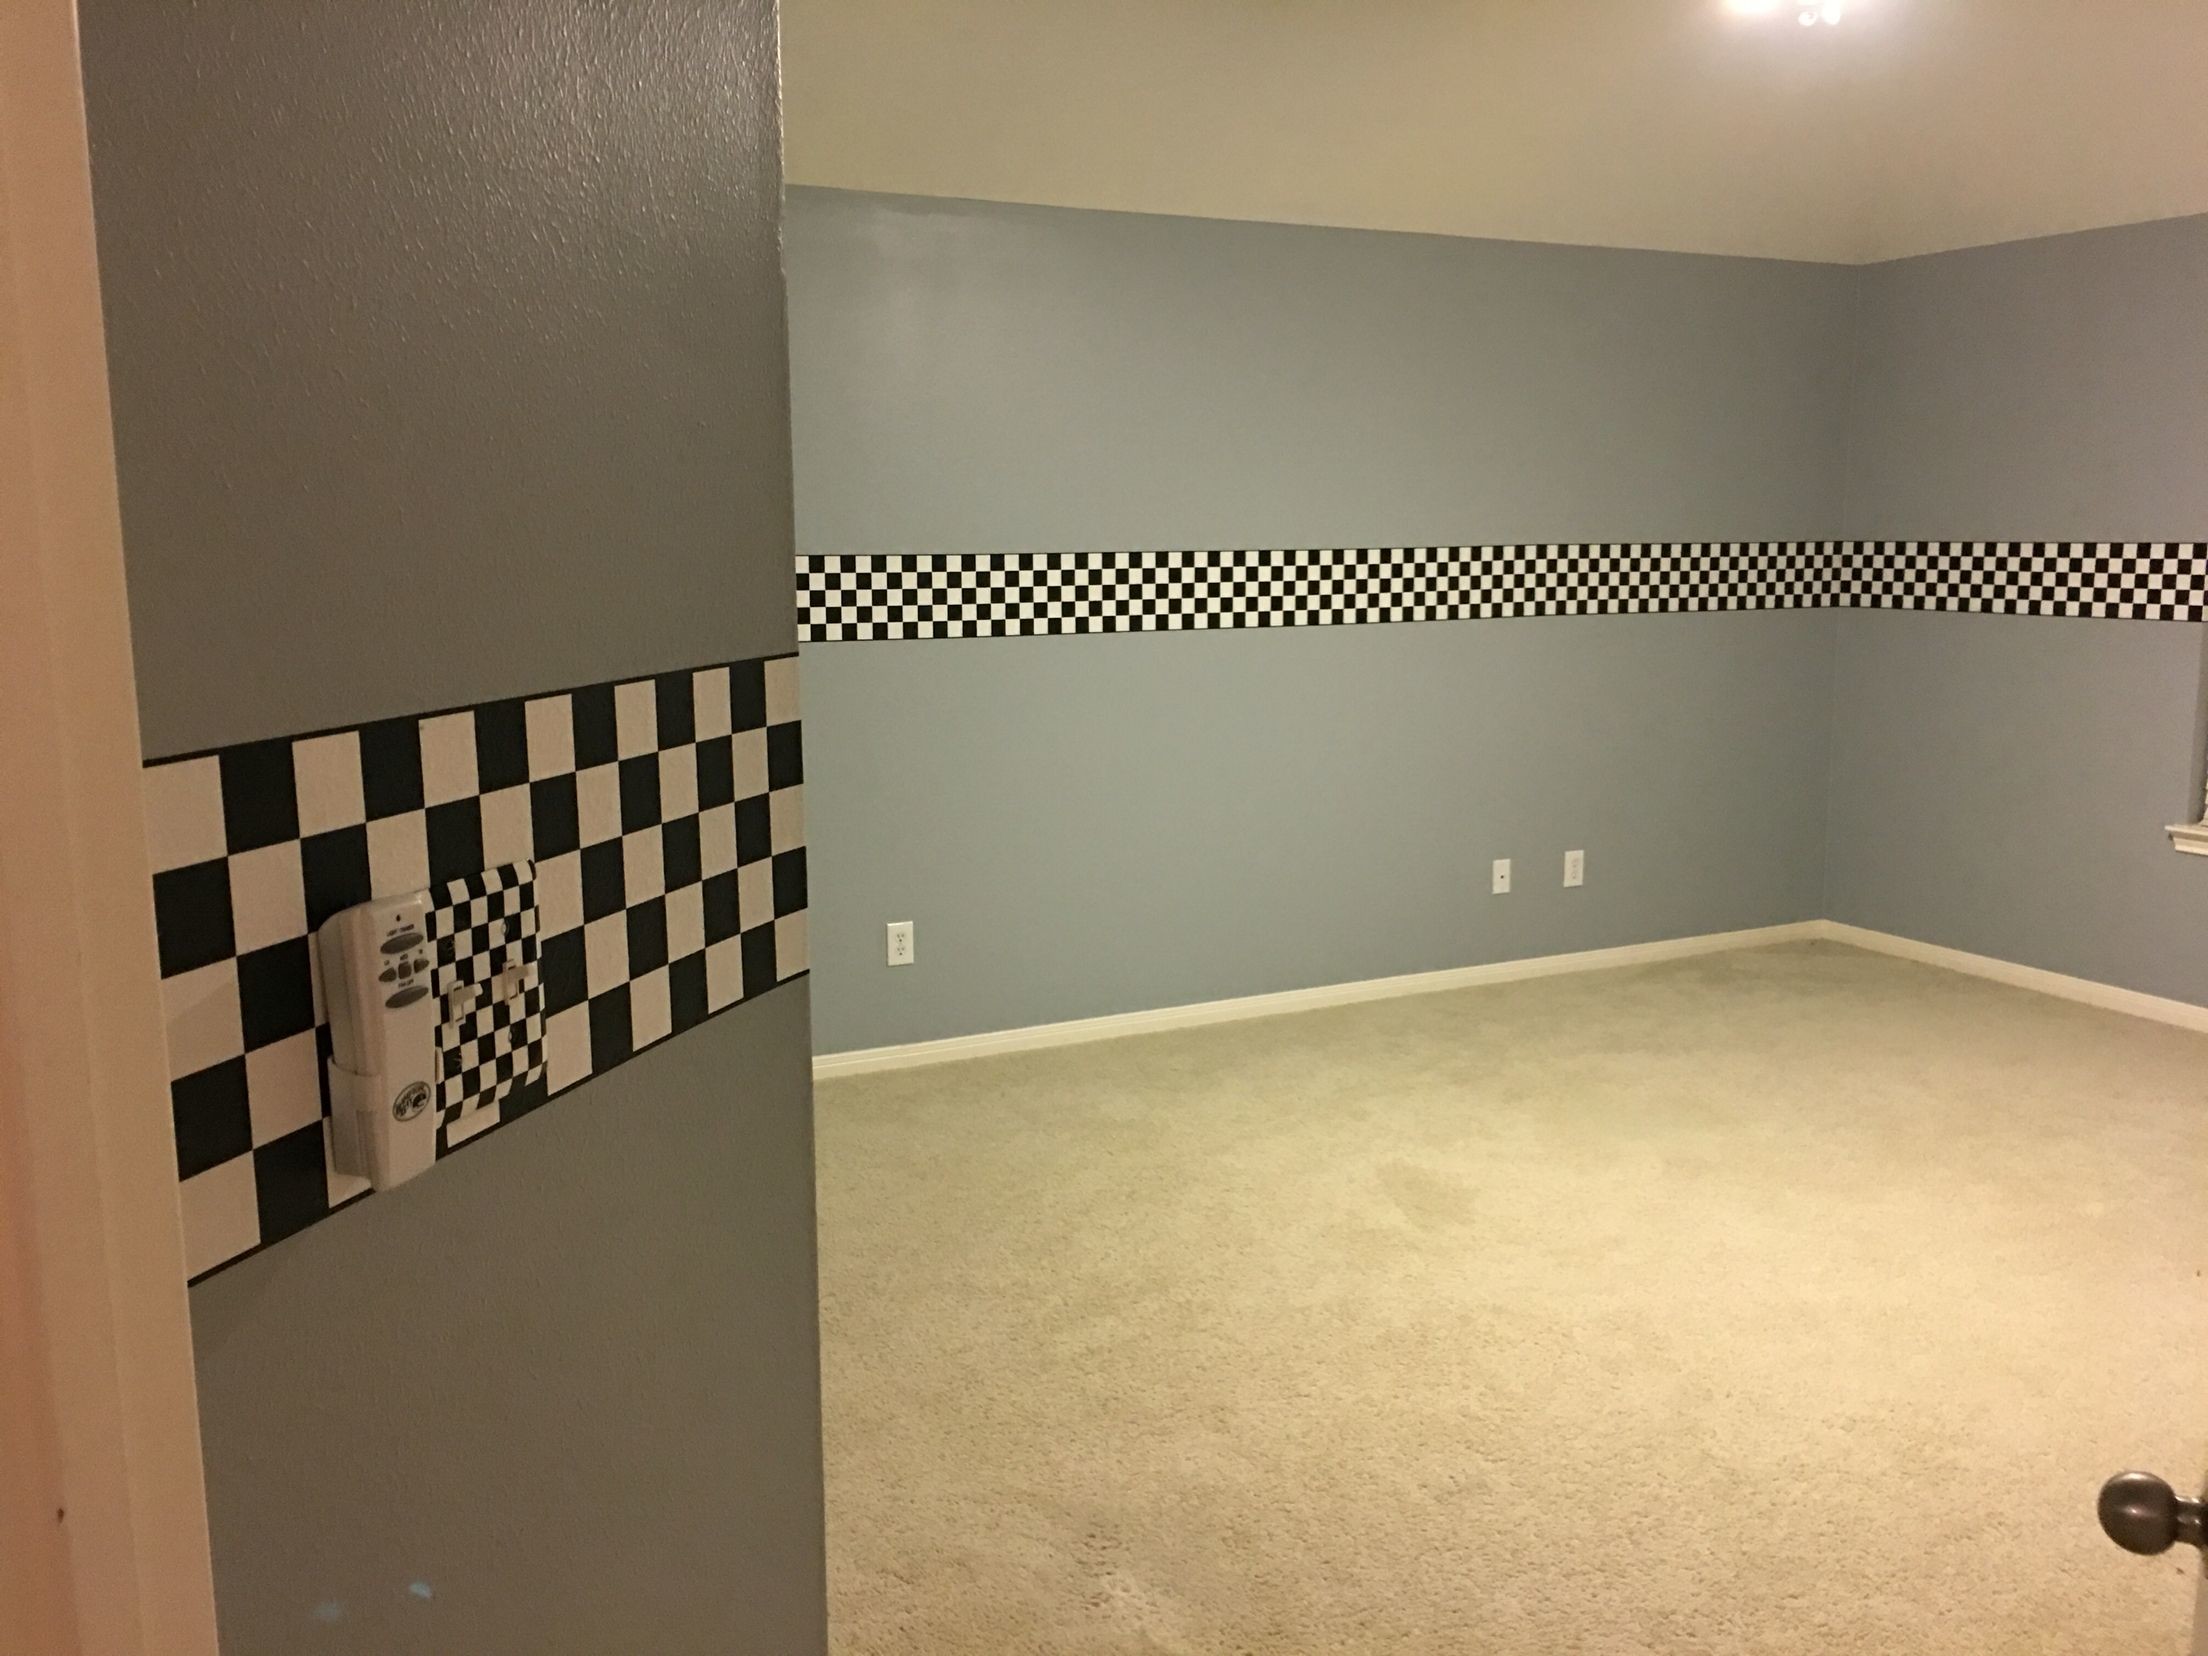 2208x1656 Light grey walls with checkered flag ribbon wallpaper border and checkered  flag light switch